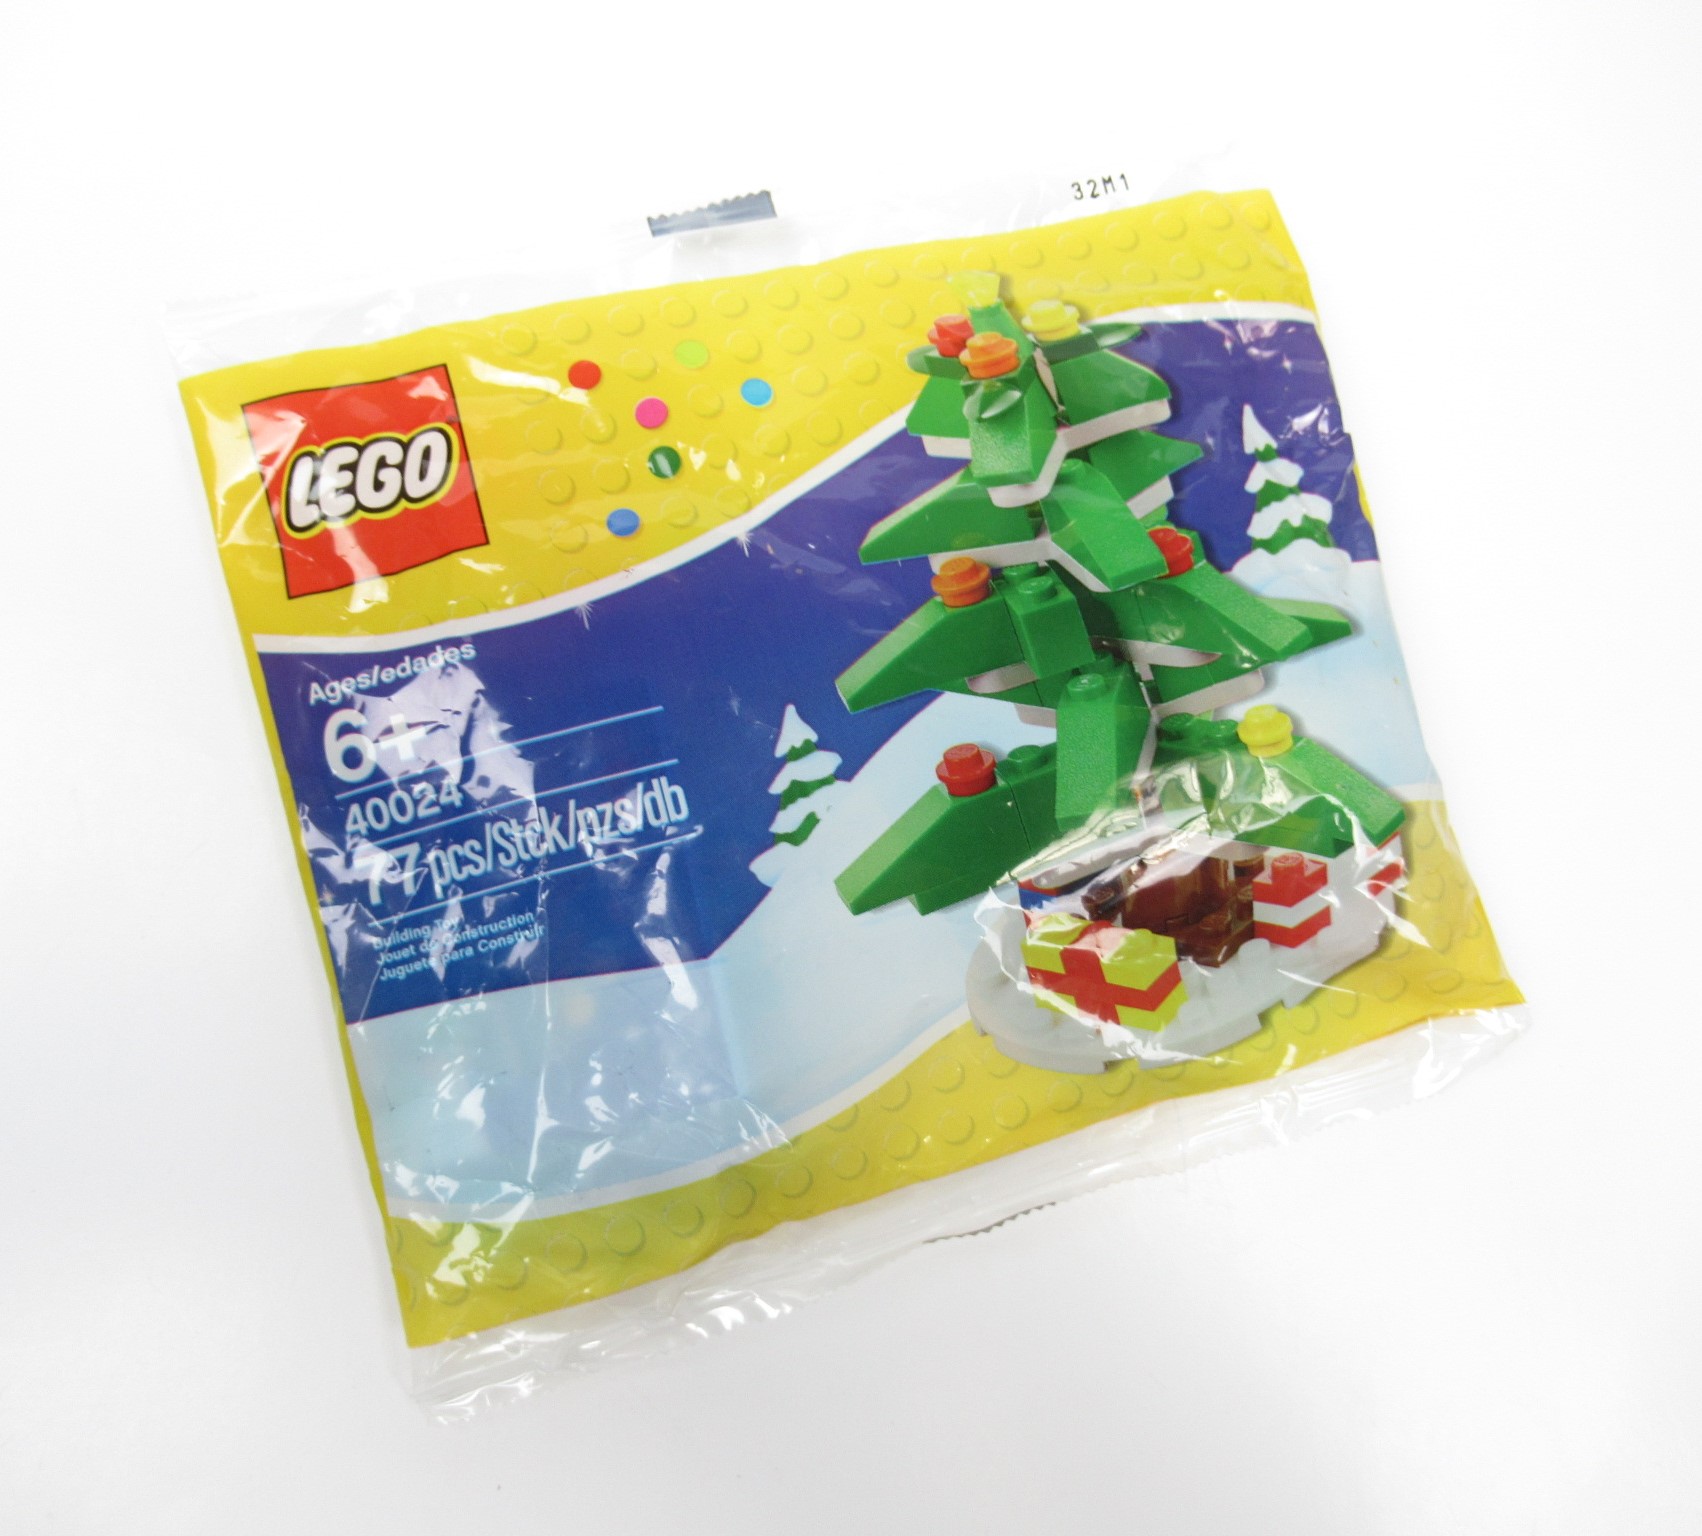 Изображение LEGO Creator - 40024 Weihnachtsbaum Polybag